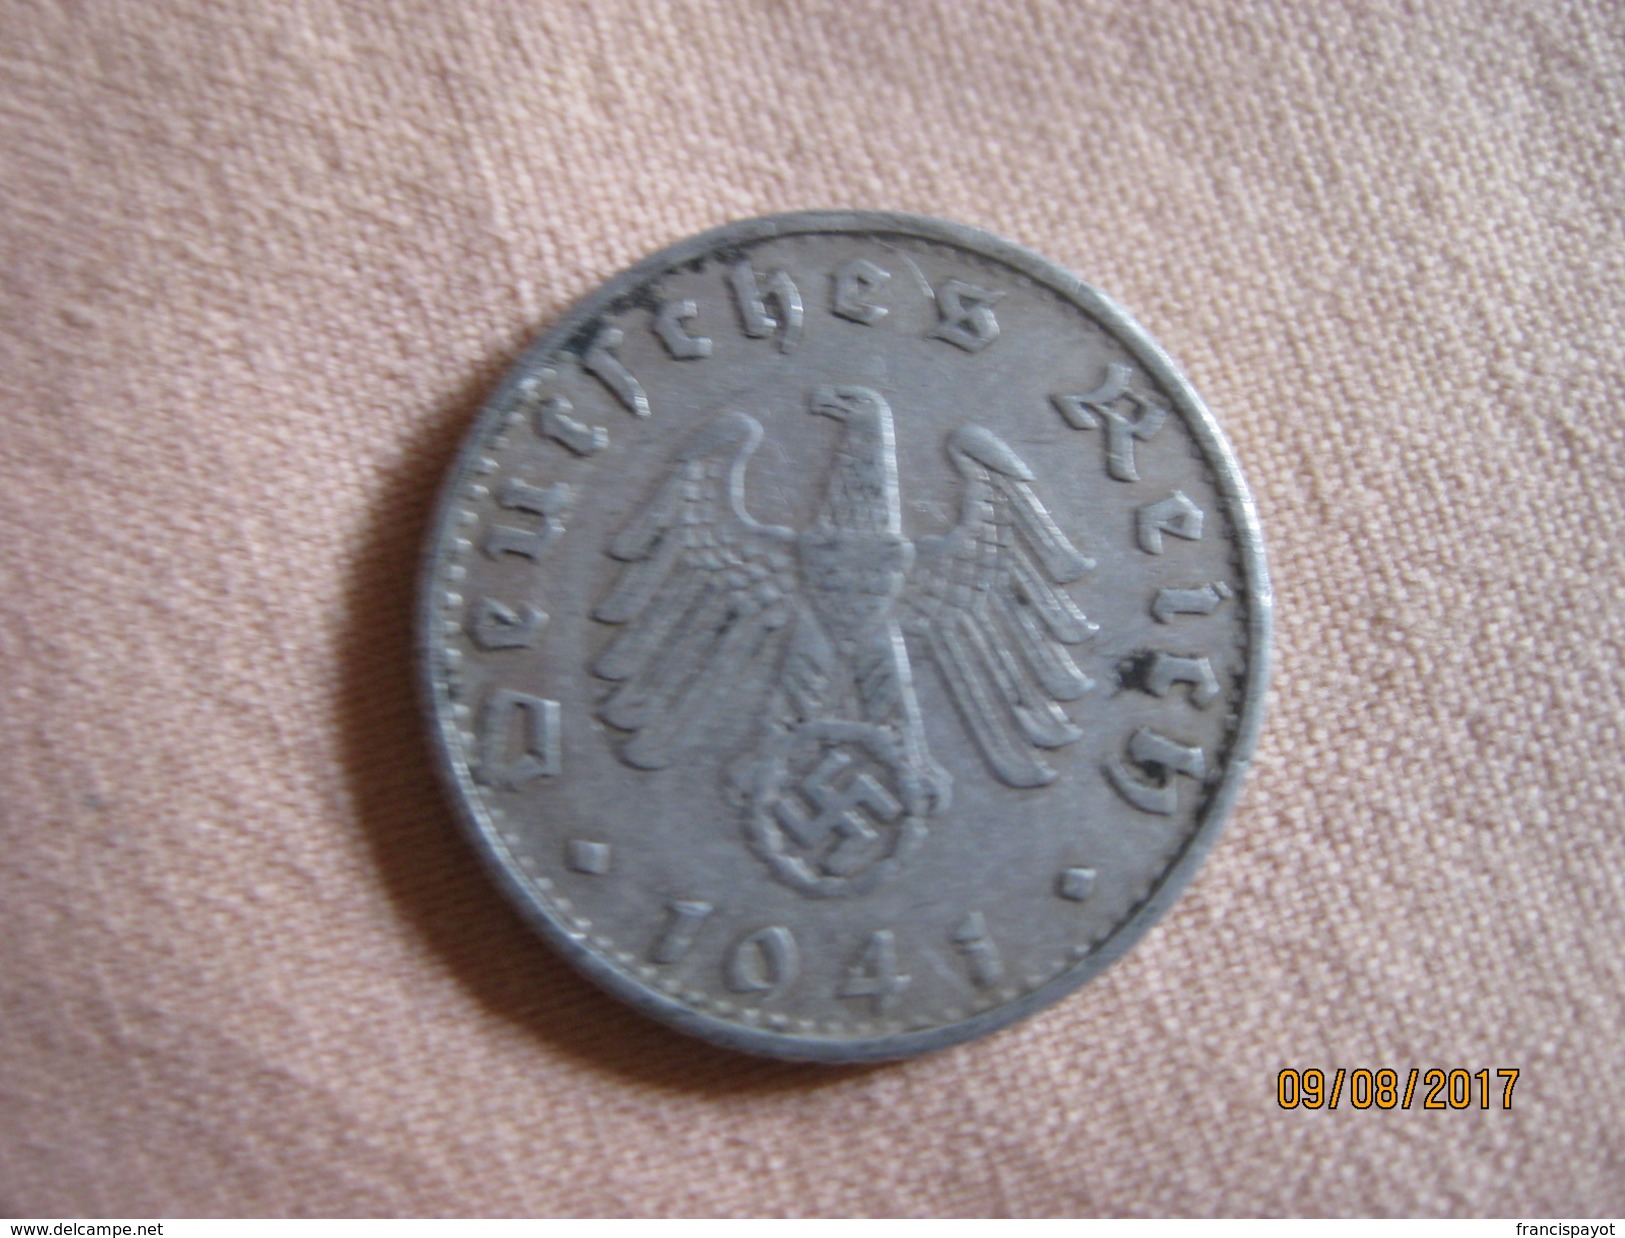 Germany: 50 Pfennig 1941 B - 50 Reichspfennig